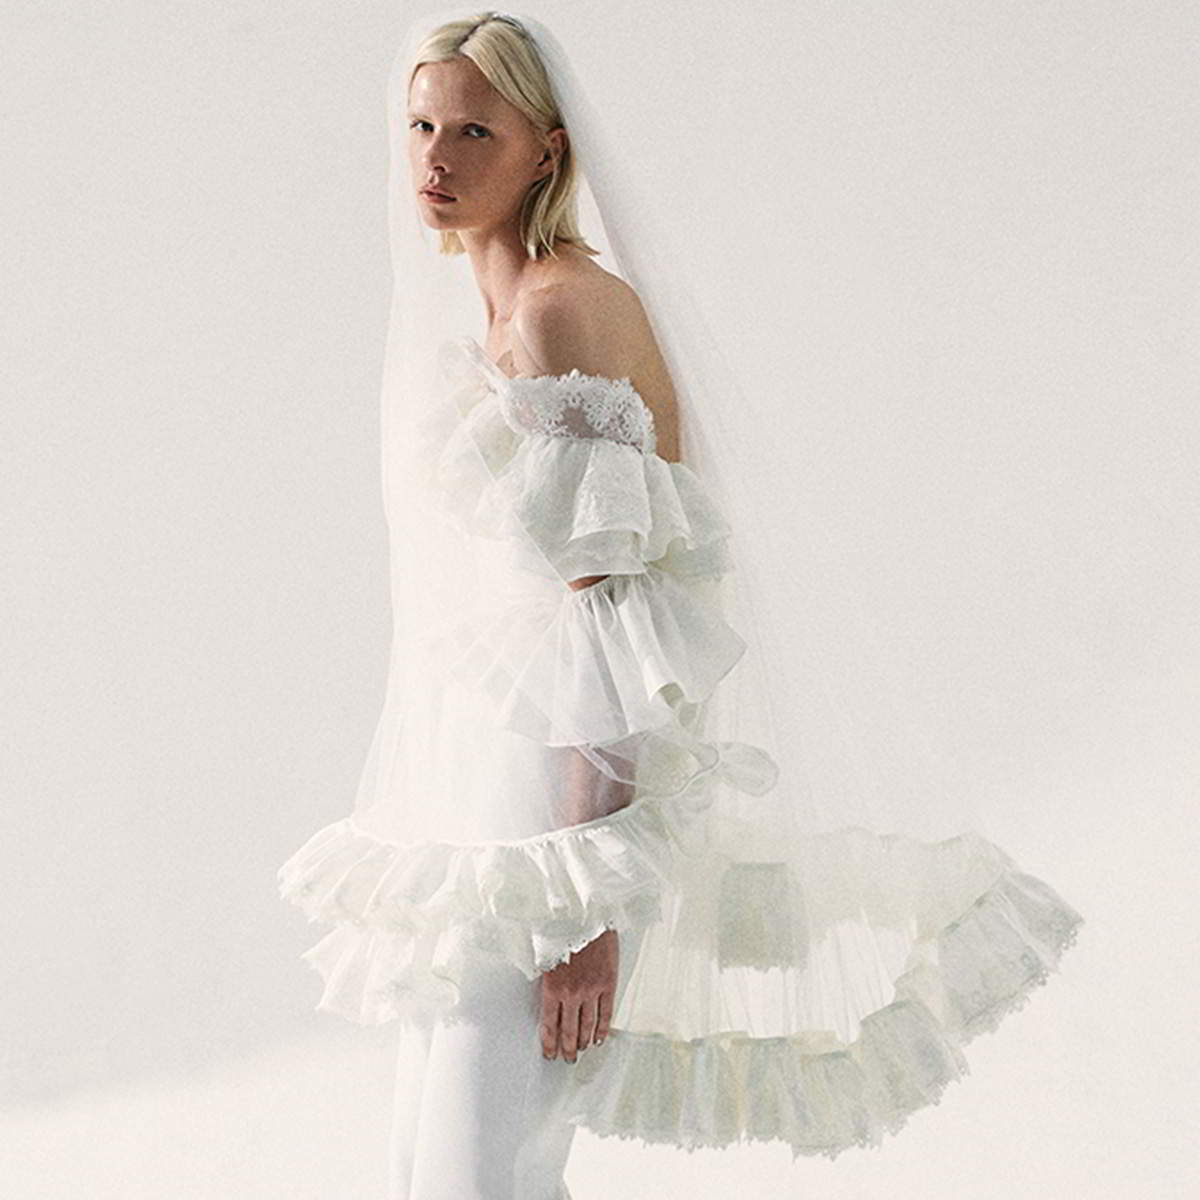 sebastien luke fall 2020 bridal collection featured on wedding inspirasi thumbnail